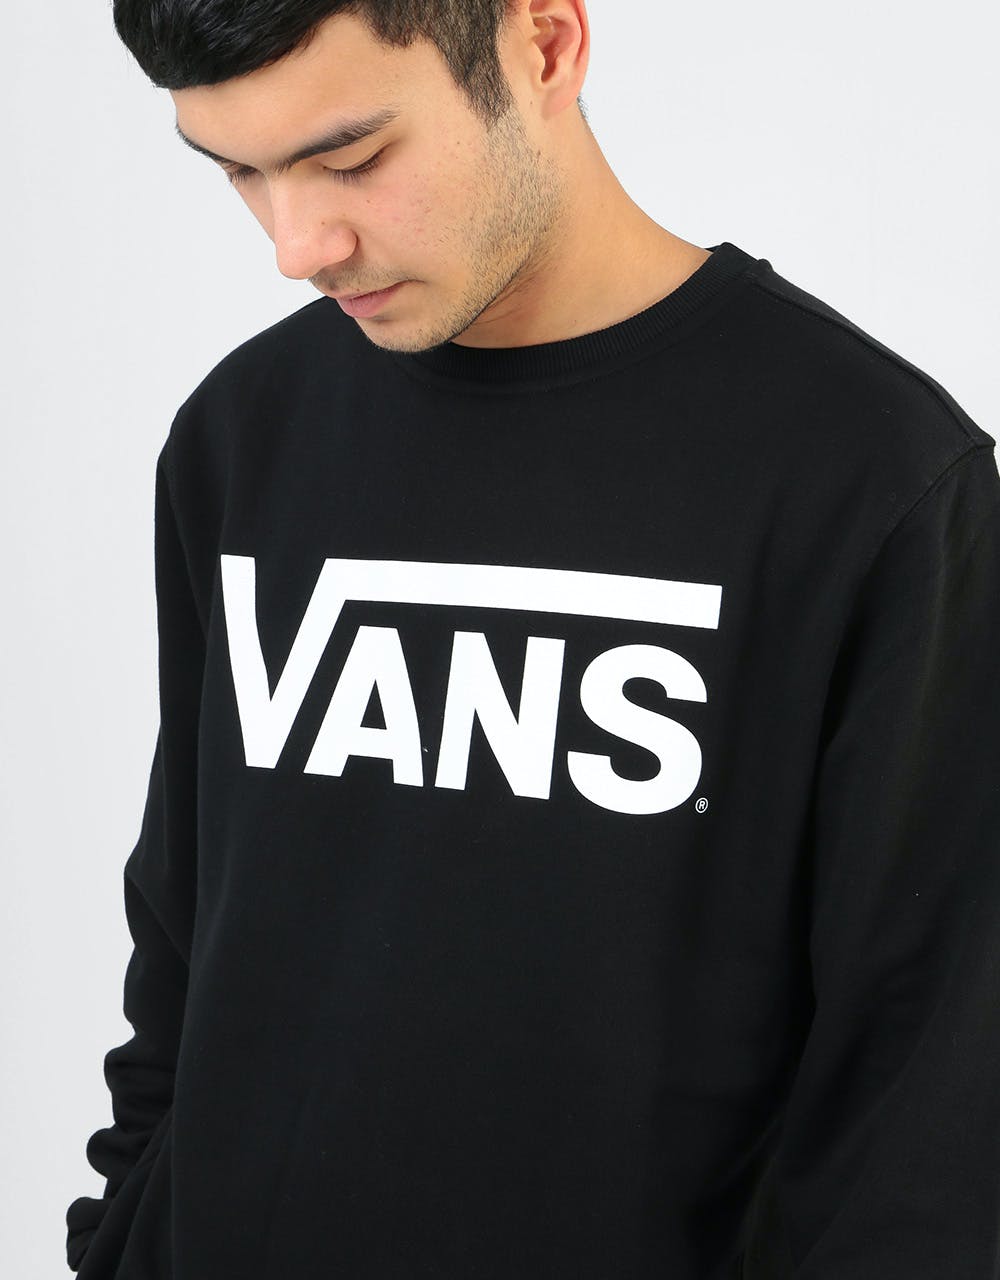 Vans Classic Crew Sweatshirt - Black/White